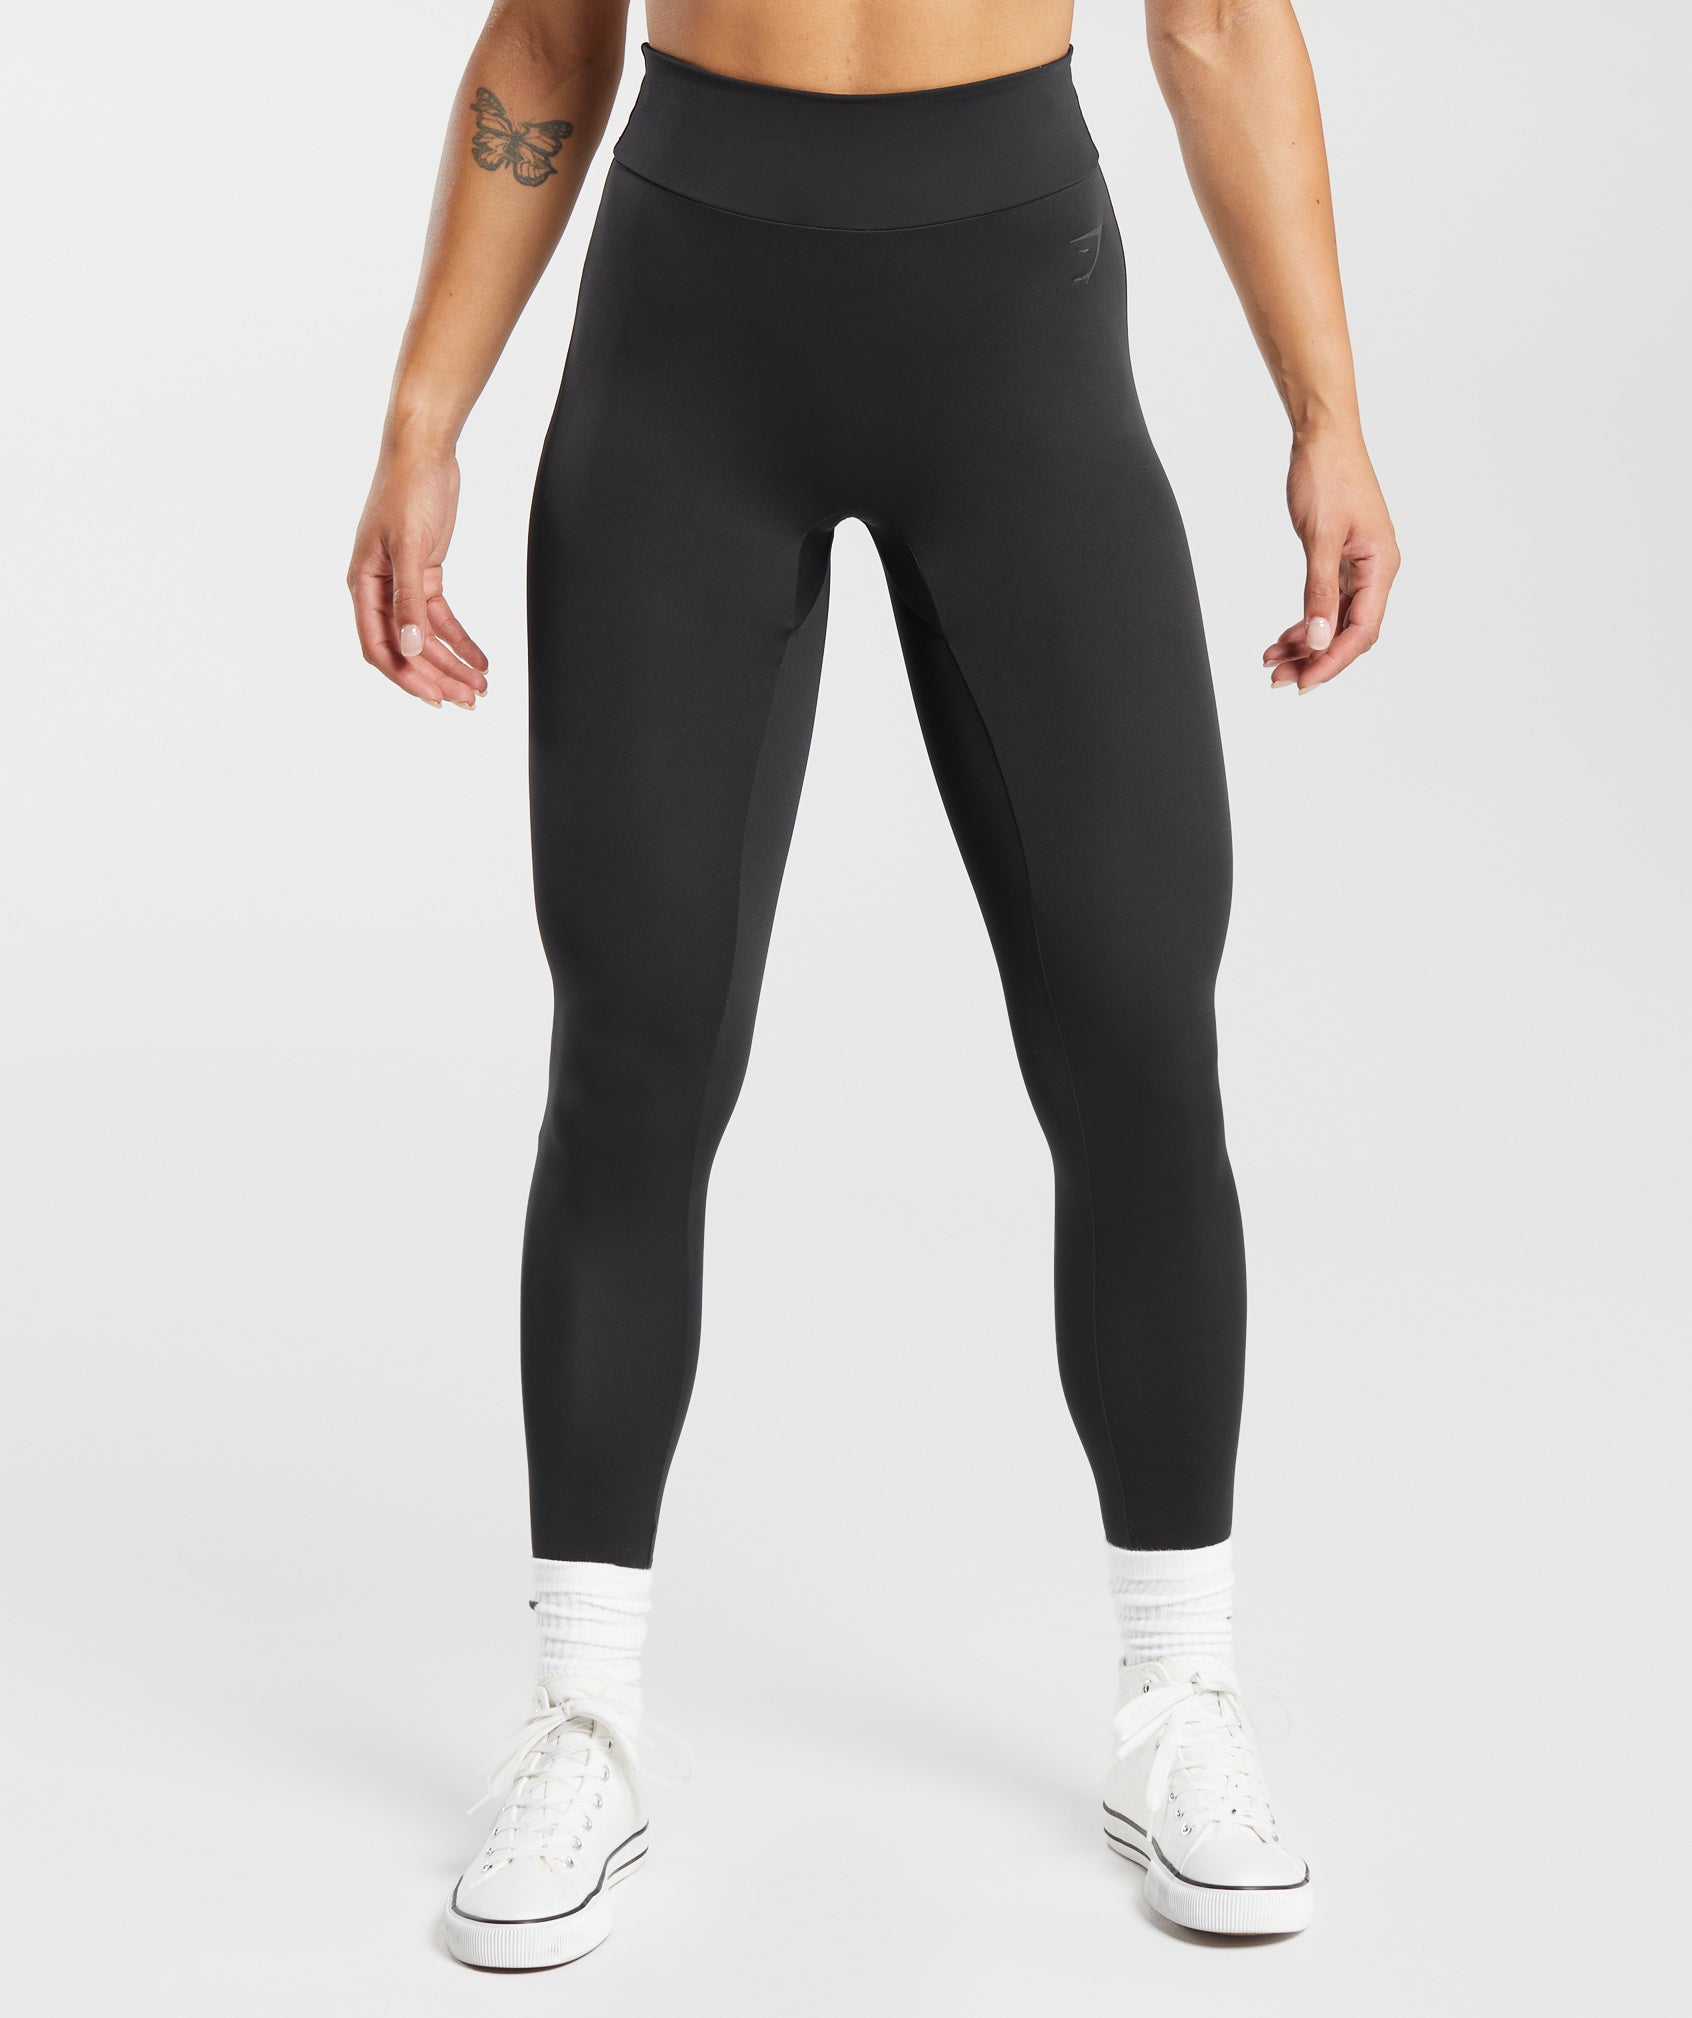 Gymshark, Pants & Jumpsuits, Gymshark Black Gray Skinny Leggings Size  Medium Large 275 Inseam